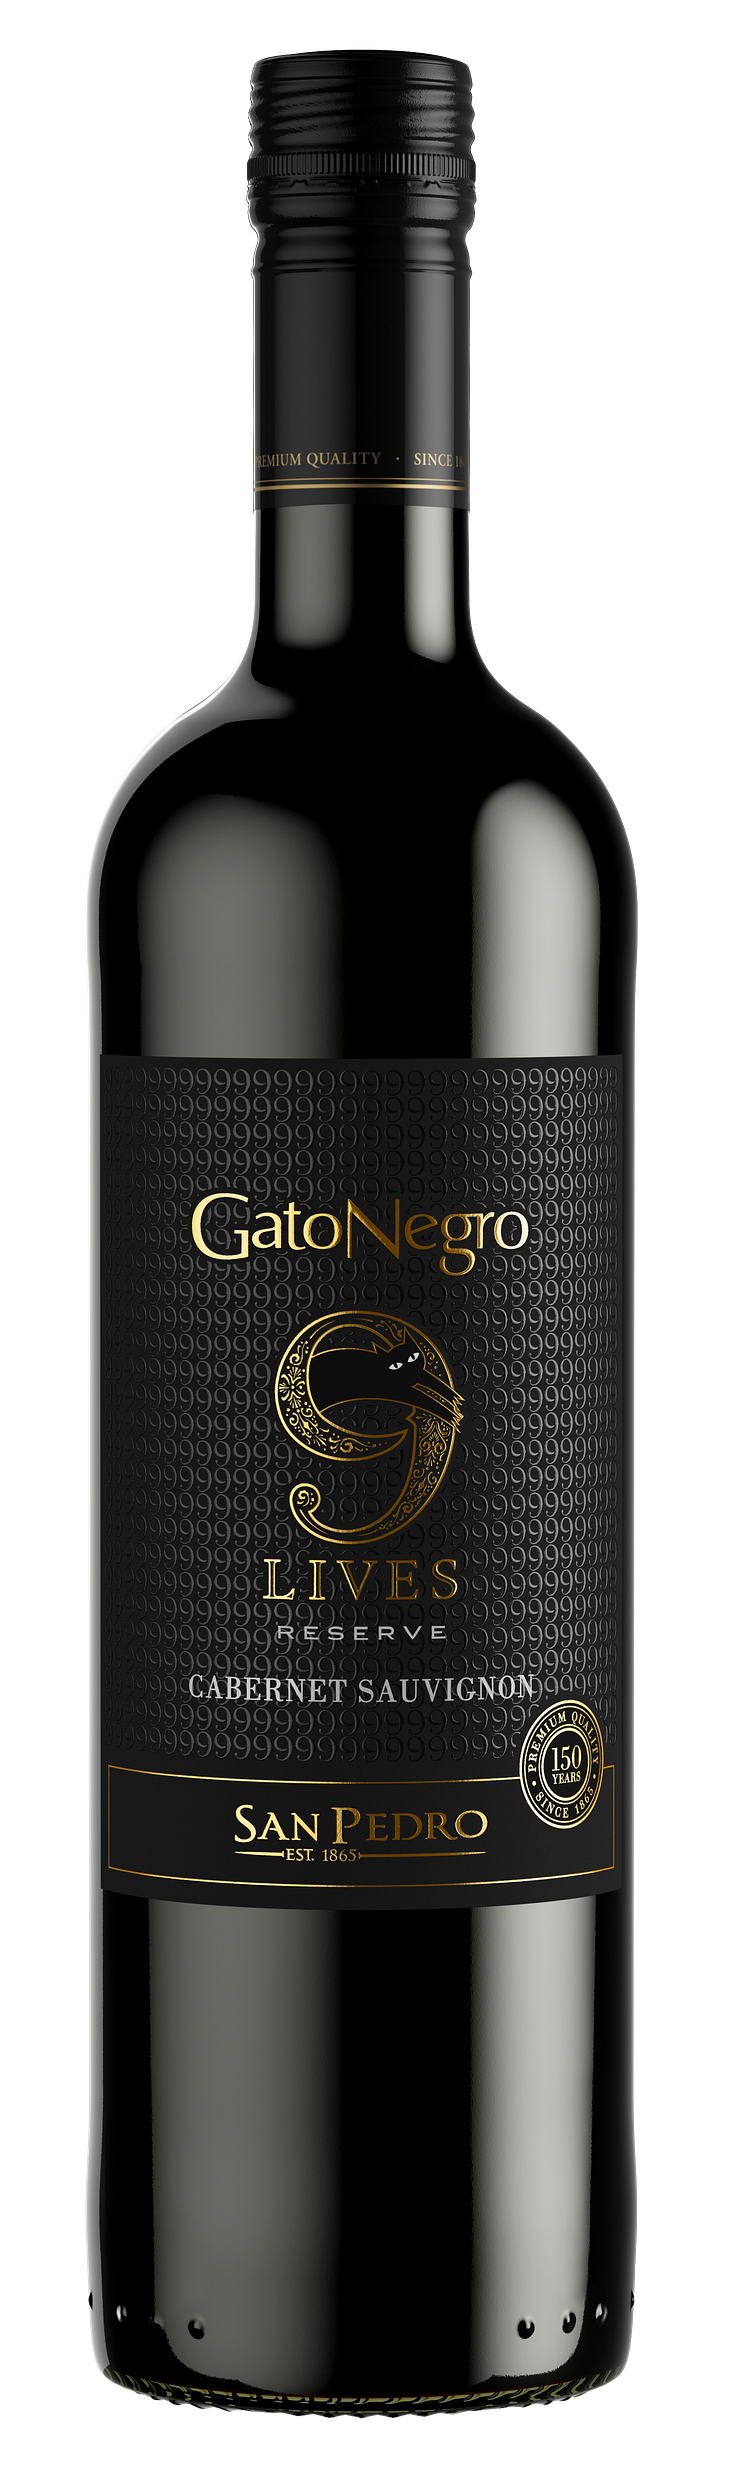 Gato Negro 9 Lives Reserve Cabernet Sauvignon 